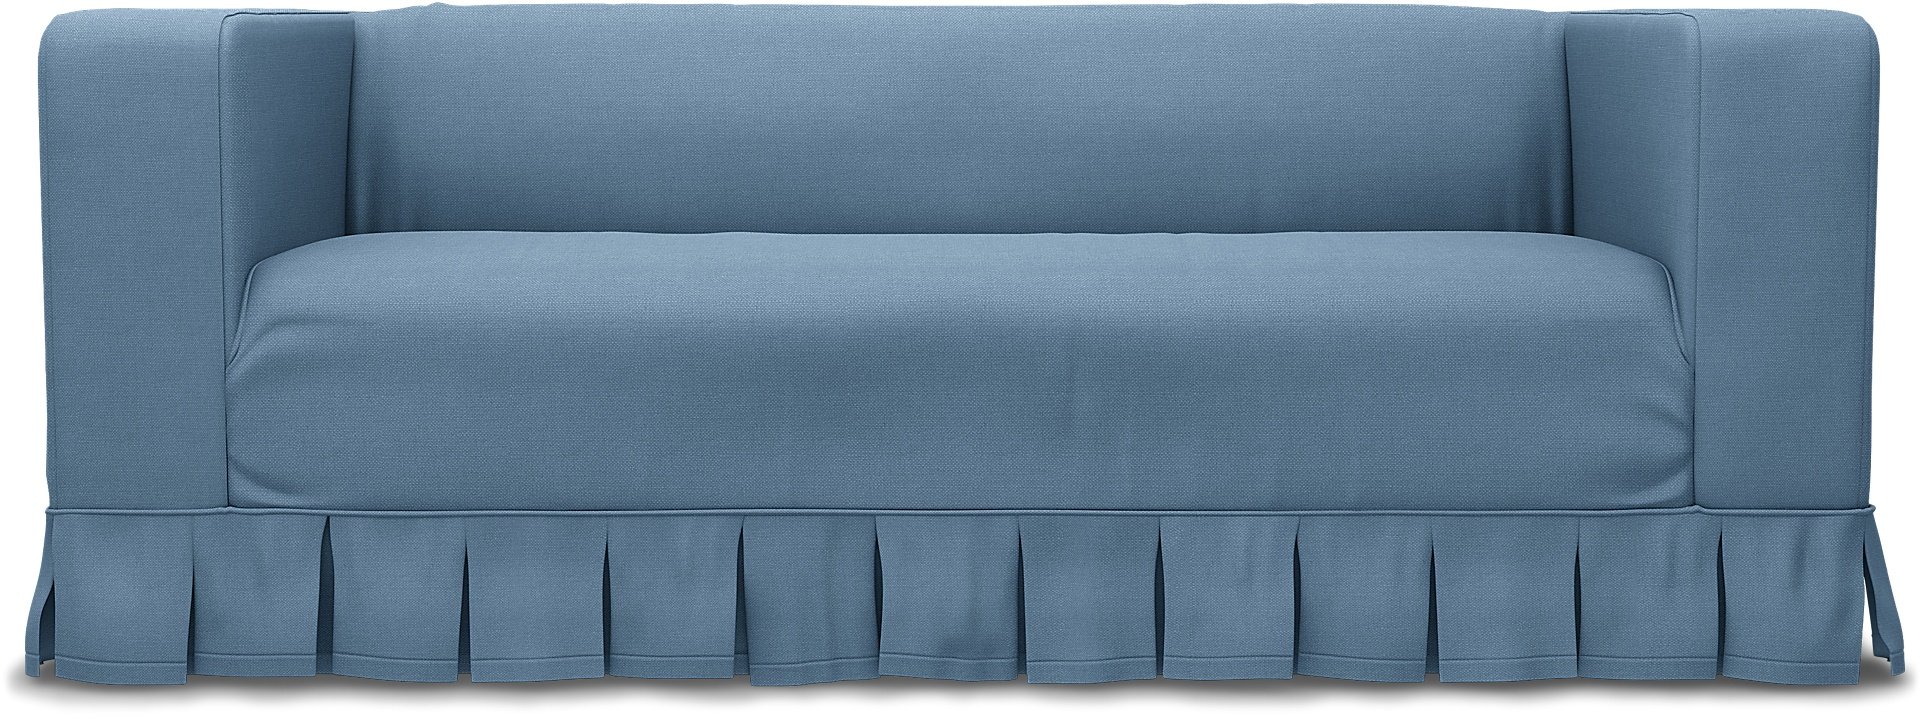 IKEA - Klippan 2 Seater Sofa Cover, Vintage Blue, Linen - Bemz